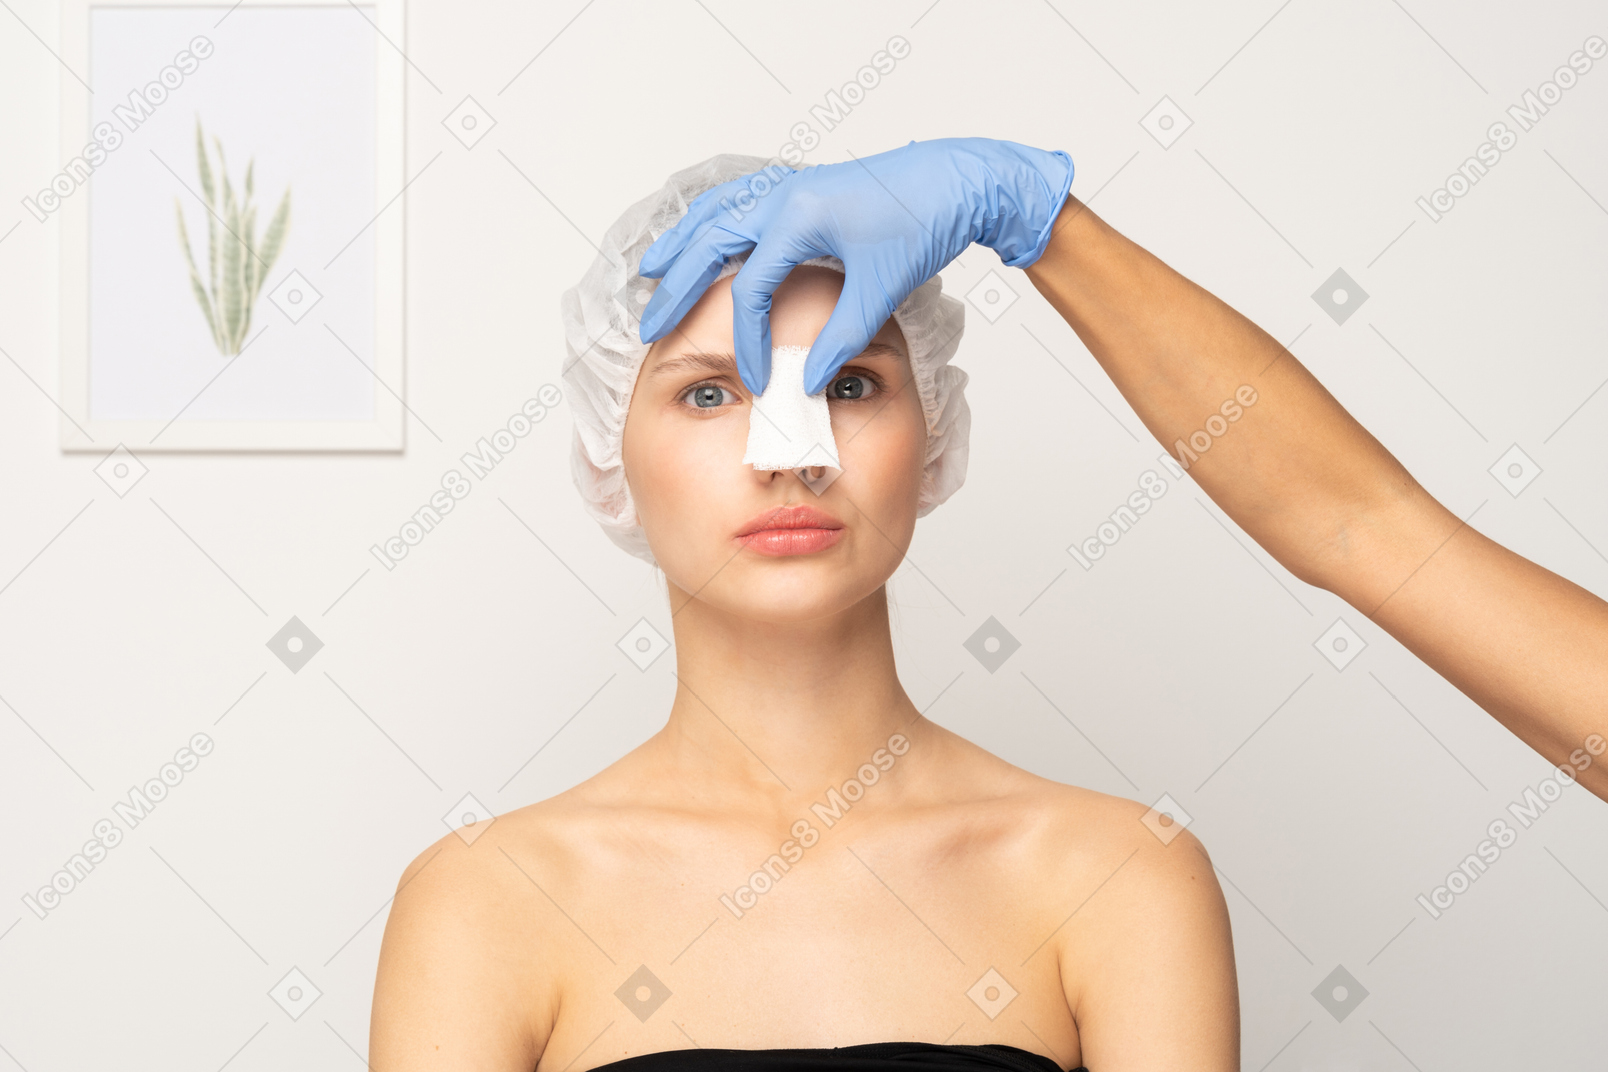 Nurse applying gauze to young woman's nose